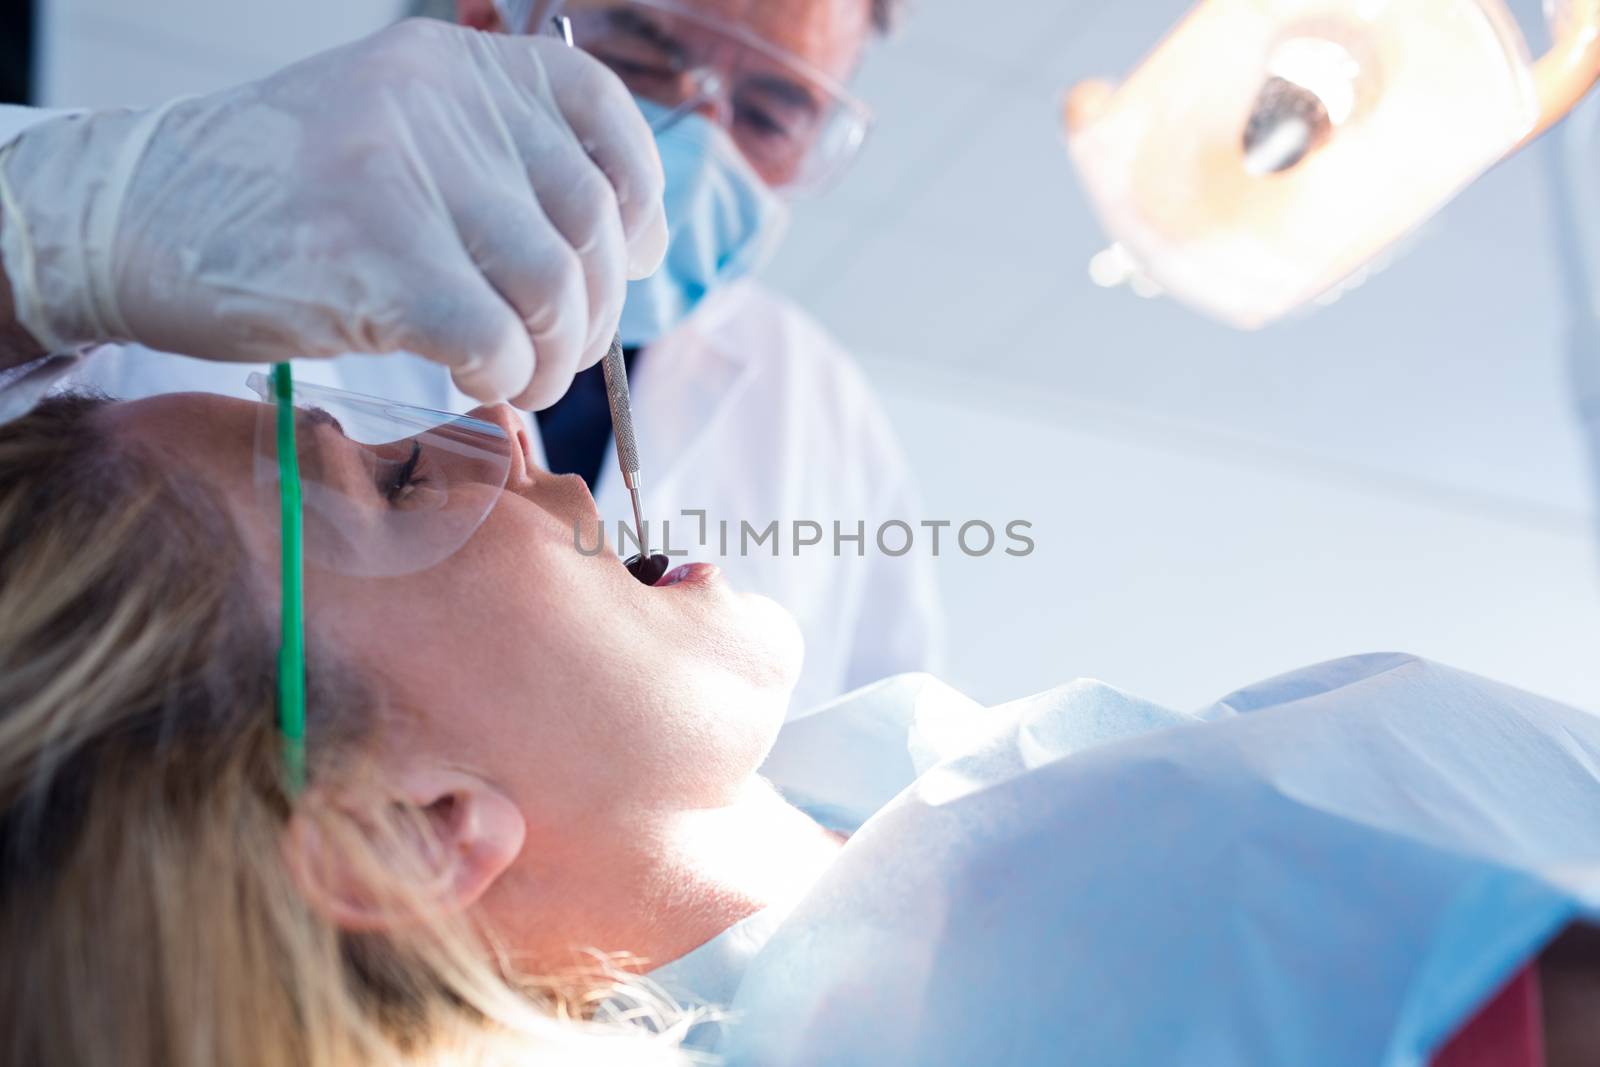 Dentist examining a patients teeth under bright light at the dental clinic